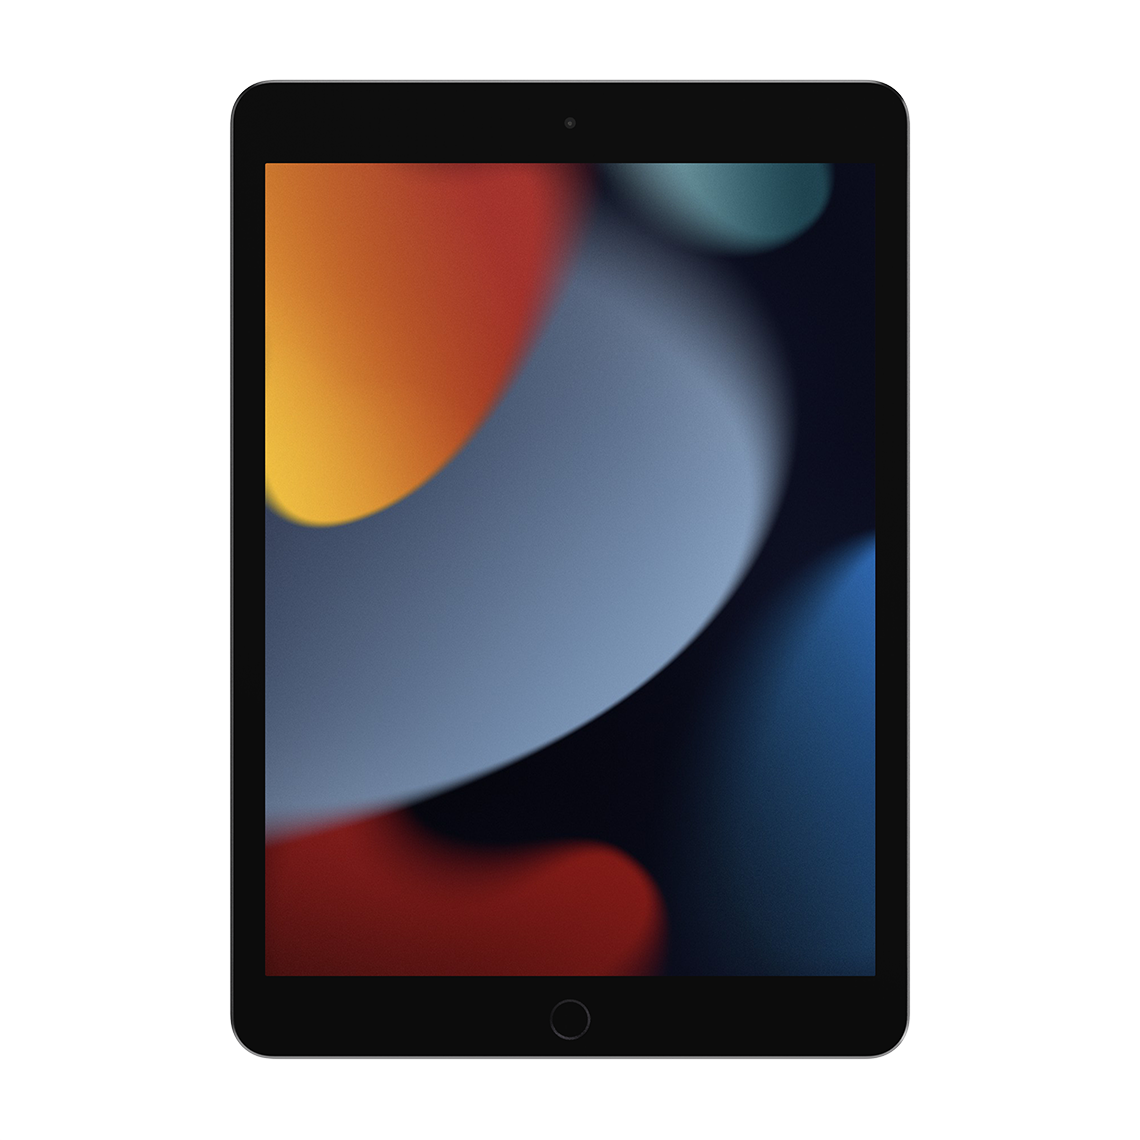 Apple iPad 10.2-inch 9th Generation - Space Gray - 64GB, Wi-Fi, Grade A